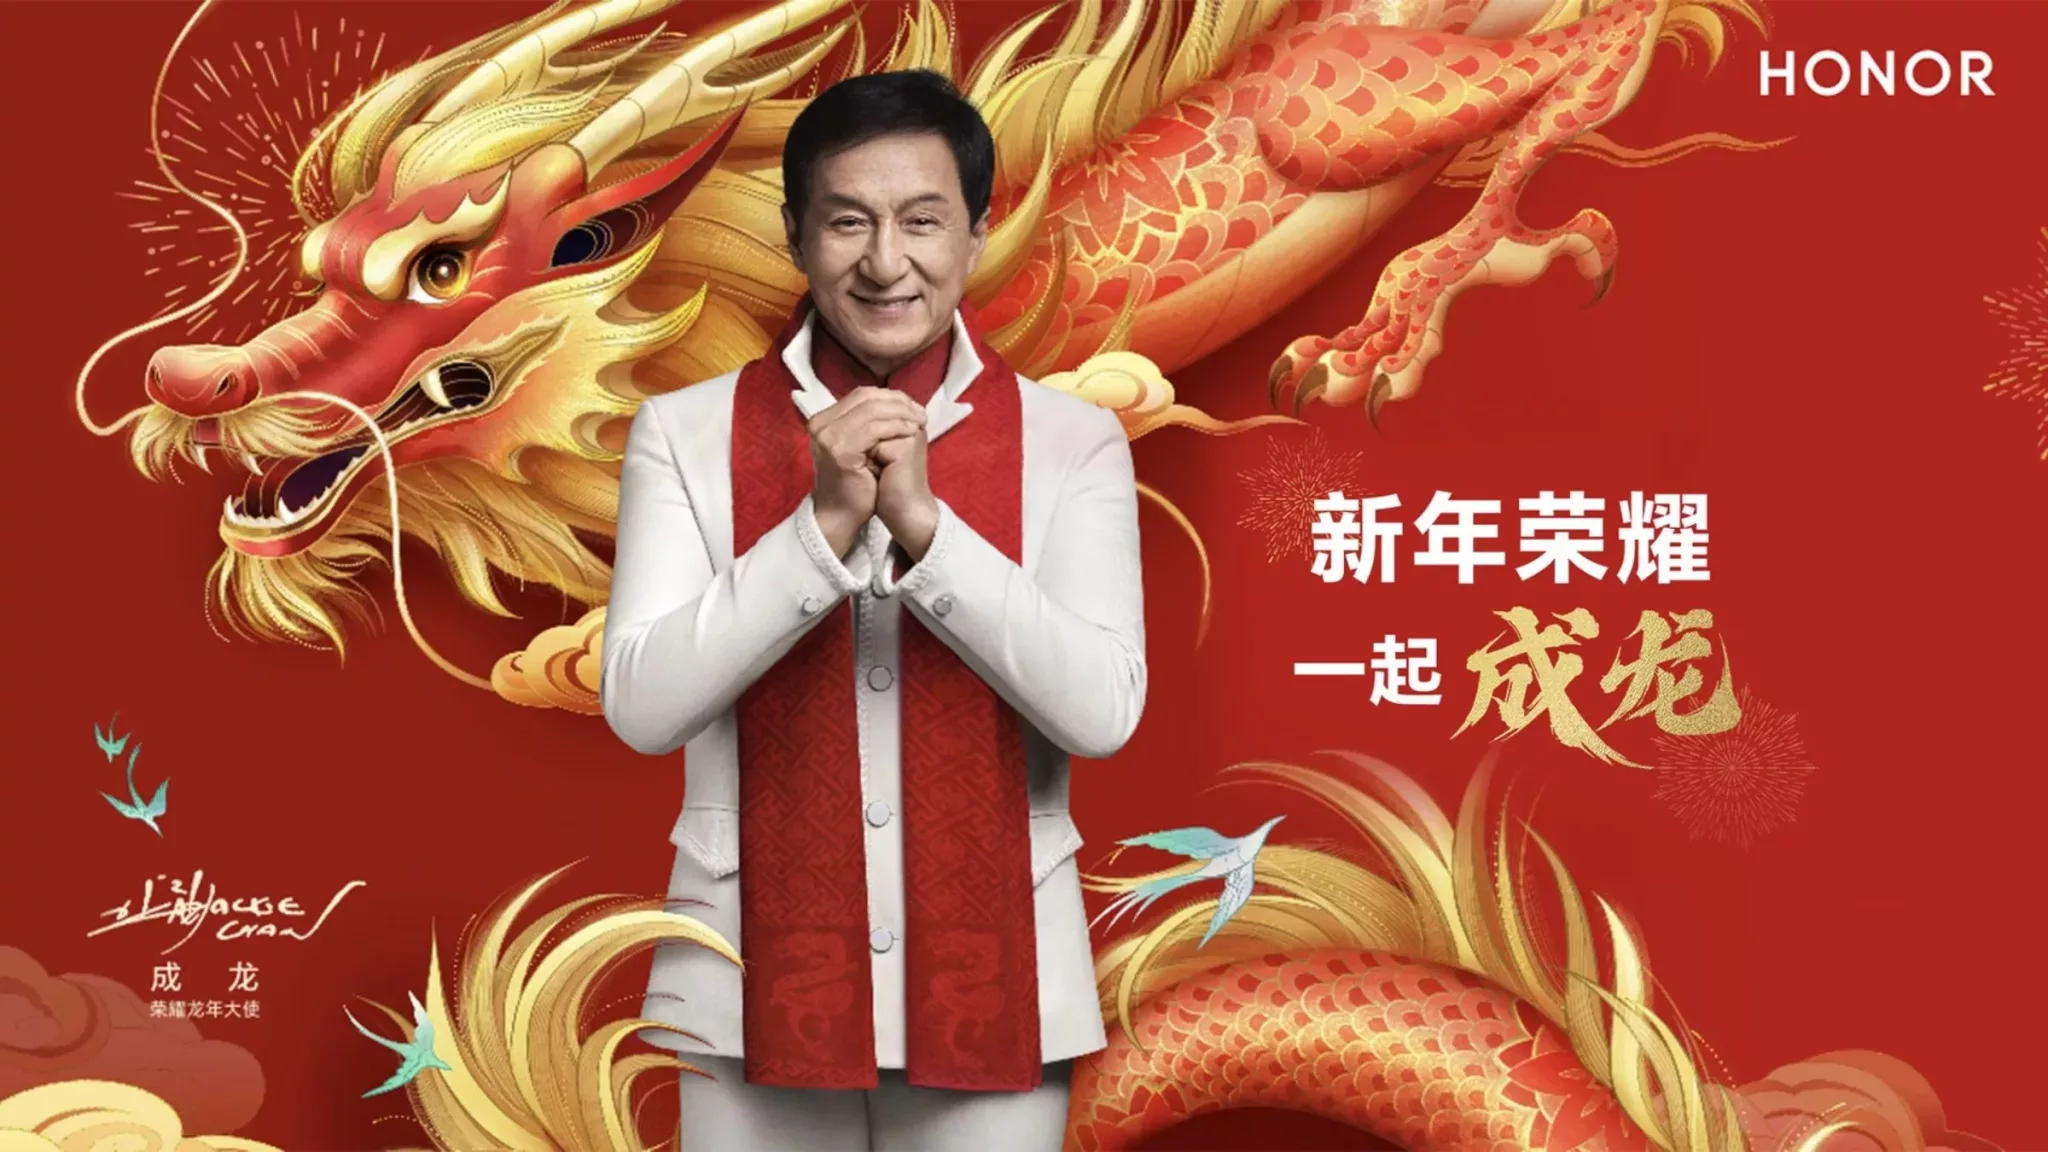 HONOR Announces Jackie Chan Dragon Year Ambassador Header